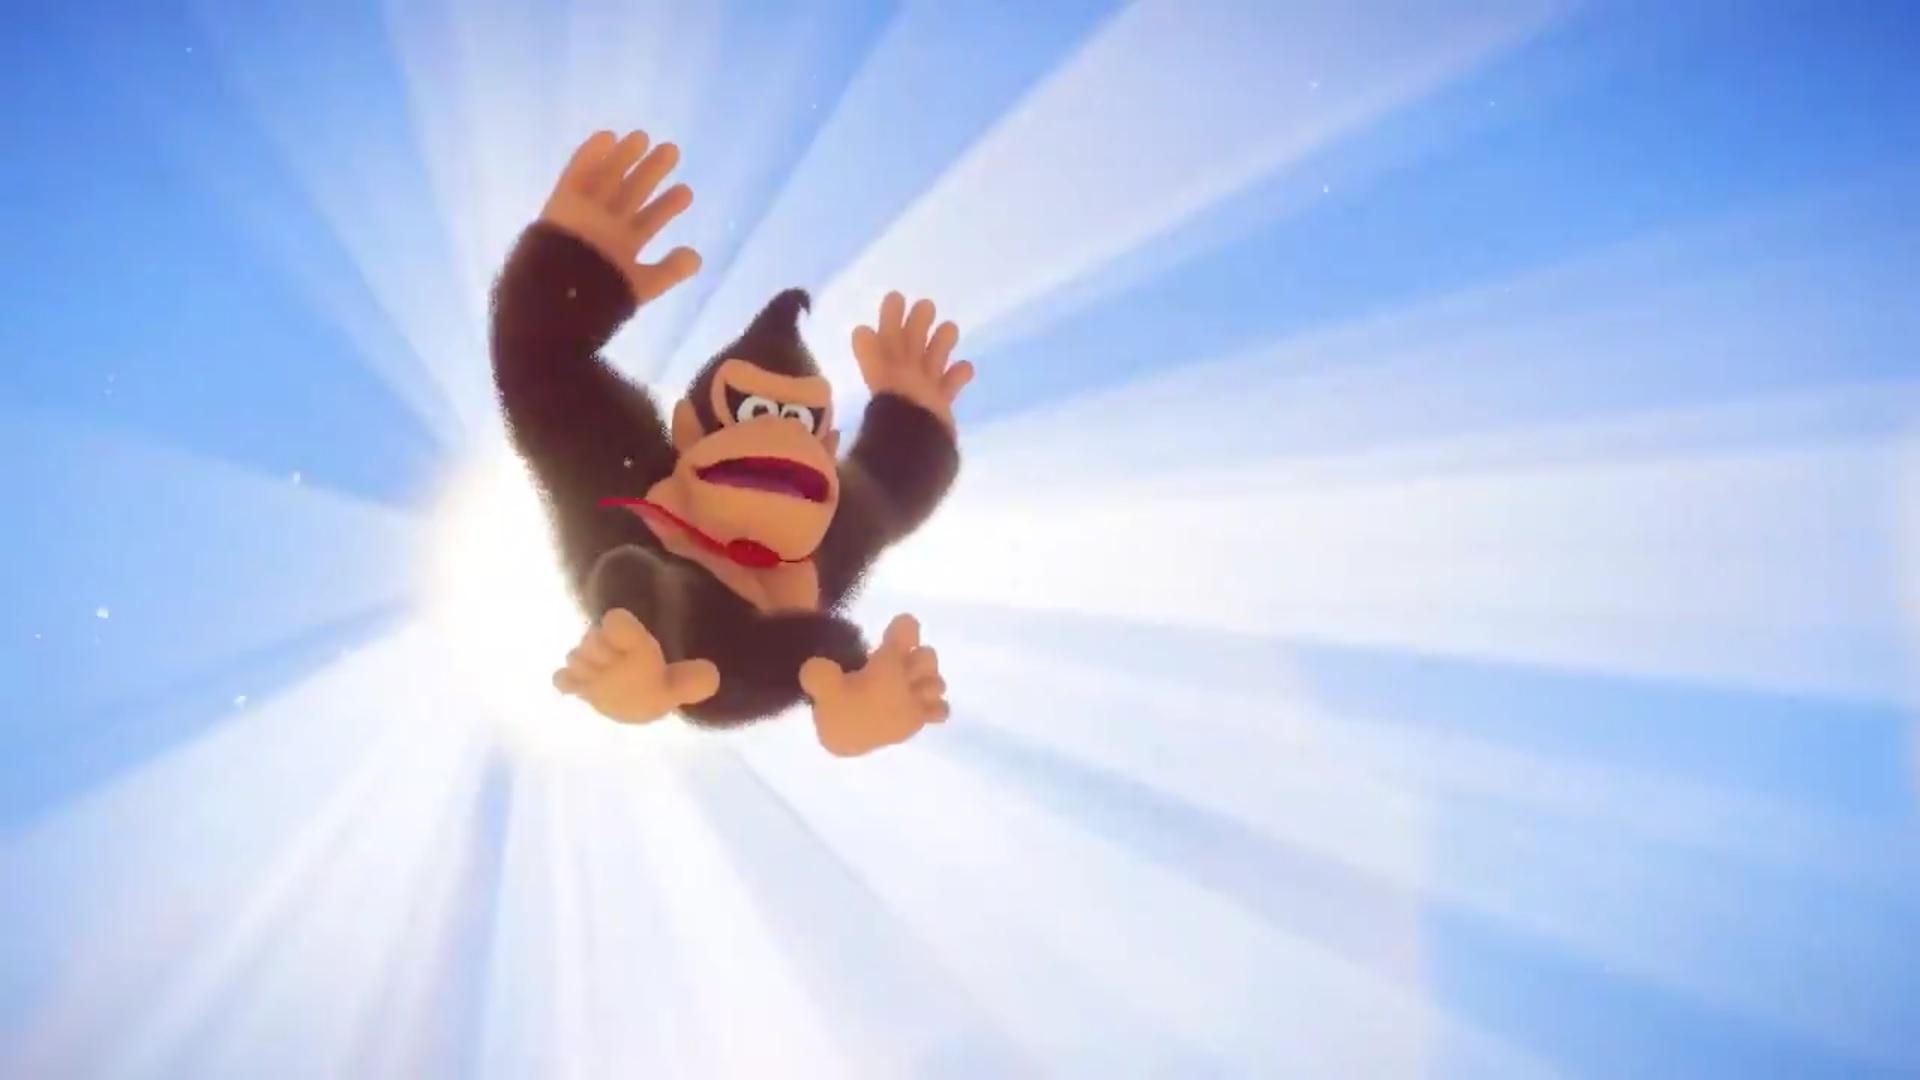 Mario + Rabbids' Donkey Kong DLC looks pretty legit